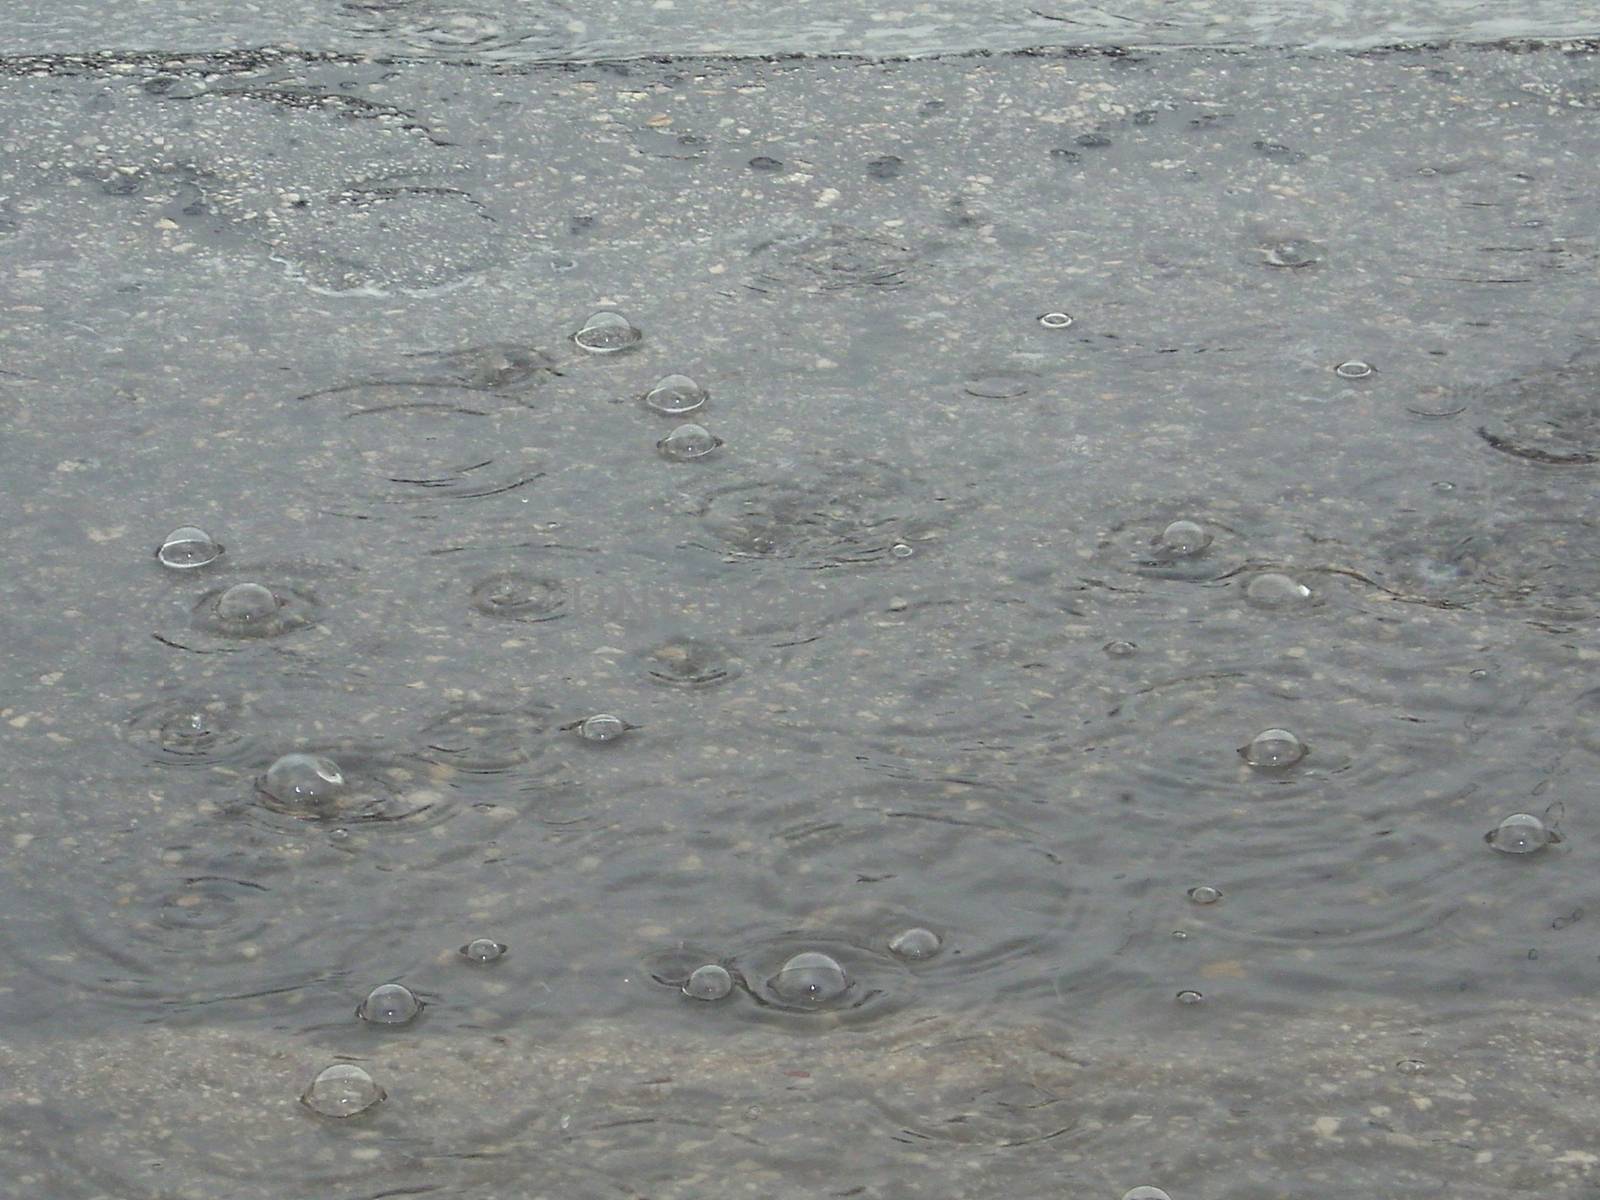 heavy rain in the puddles of rain by Irarlaki